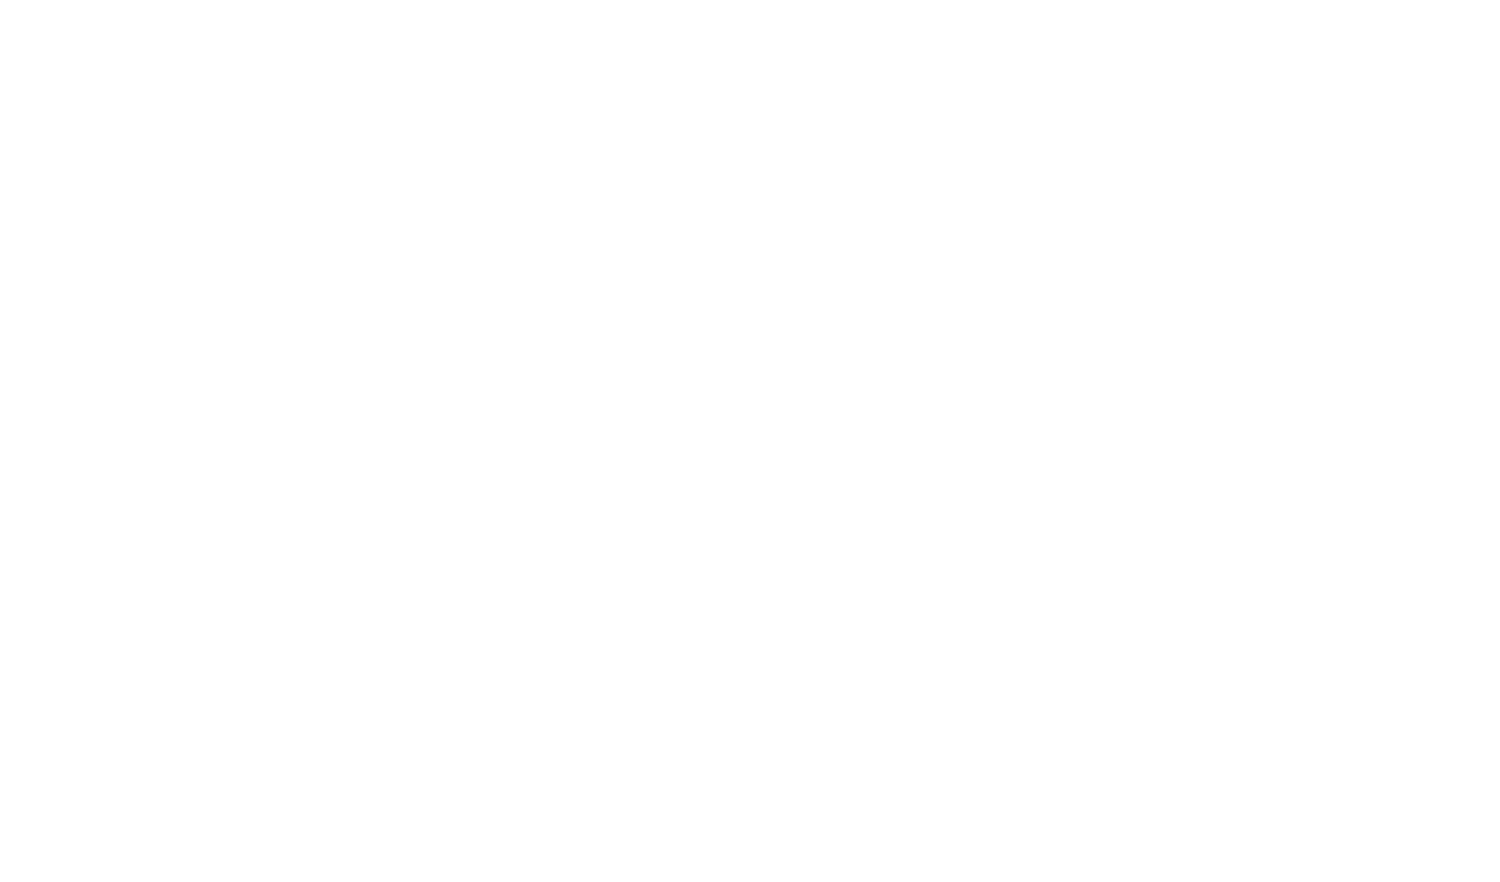 Dunedin Riding Academy